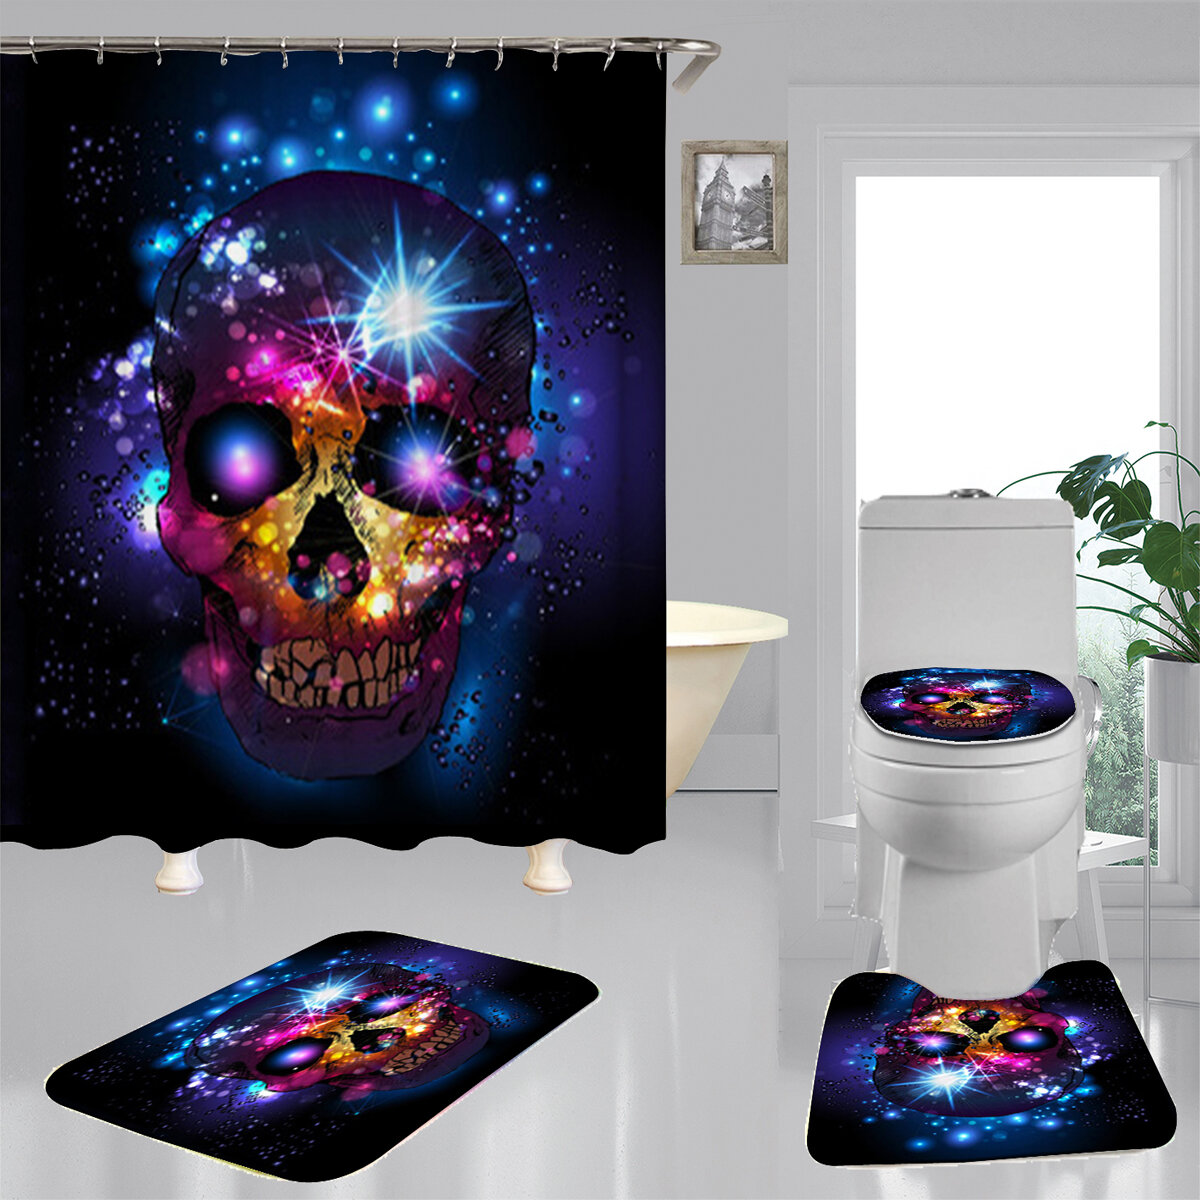 180*180cm Halloween Skull Bathroom Shower Curtain 3 Sets Decor Waterproof Fabric, Banggood  - buy with discount